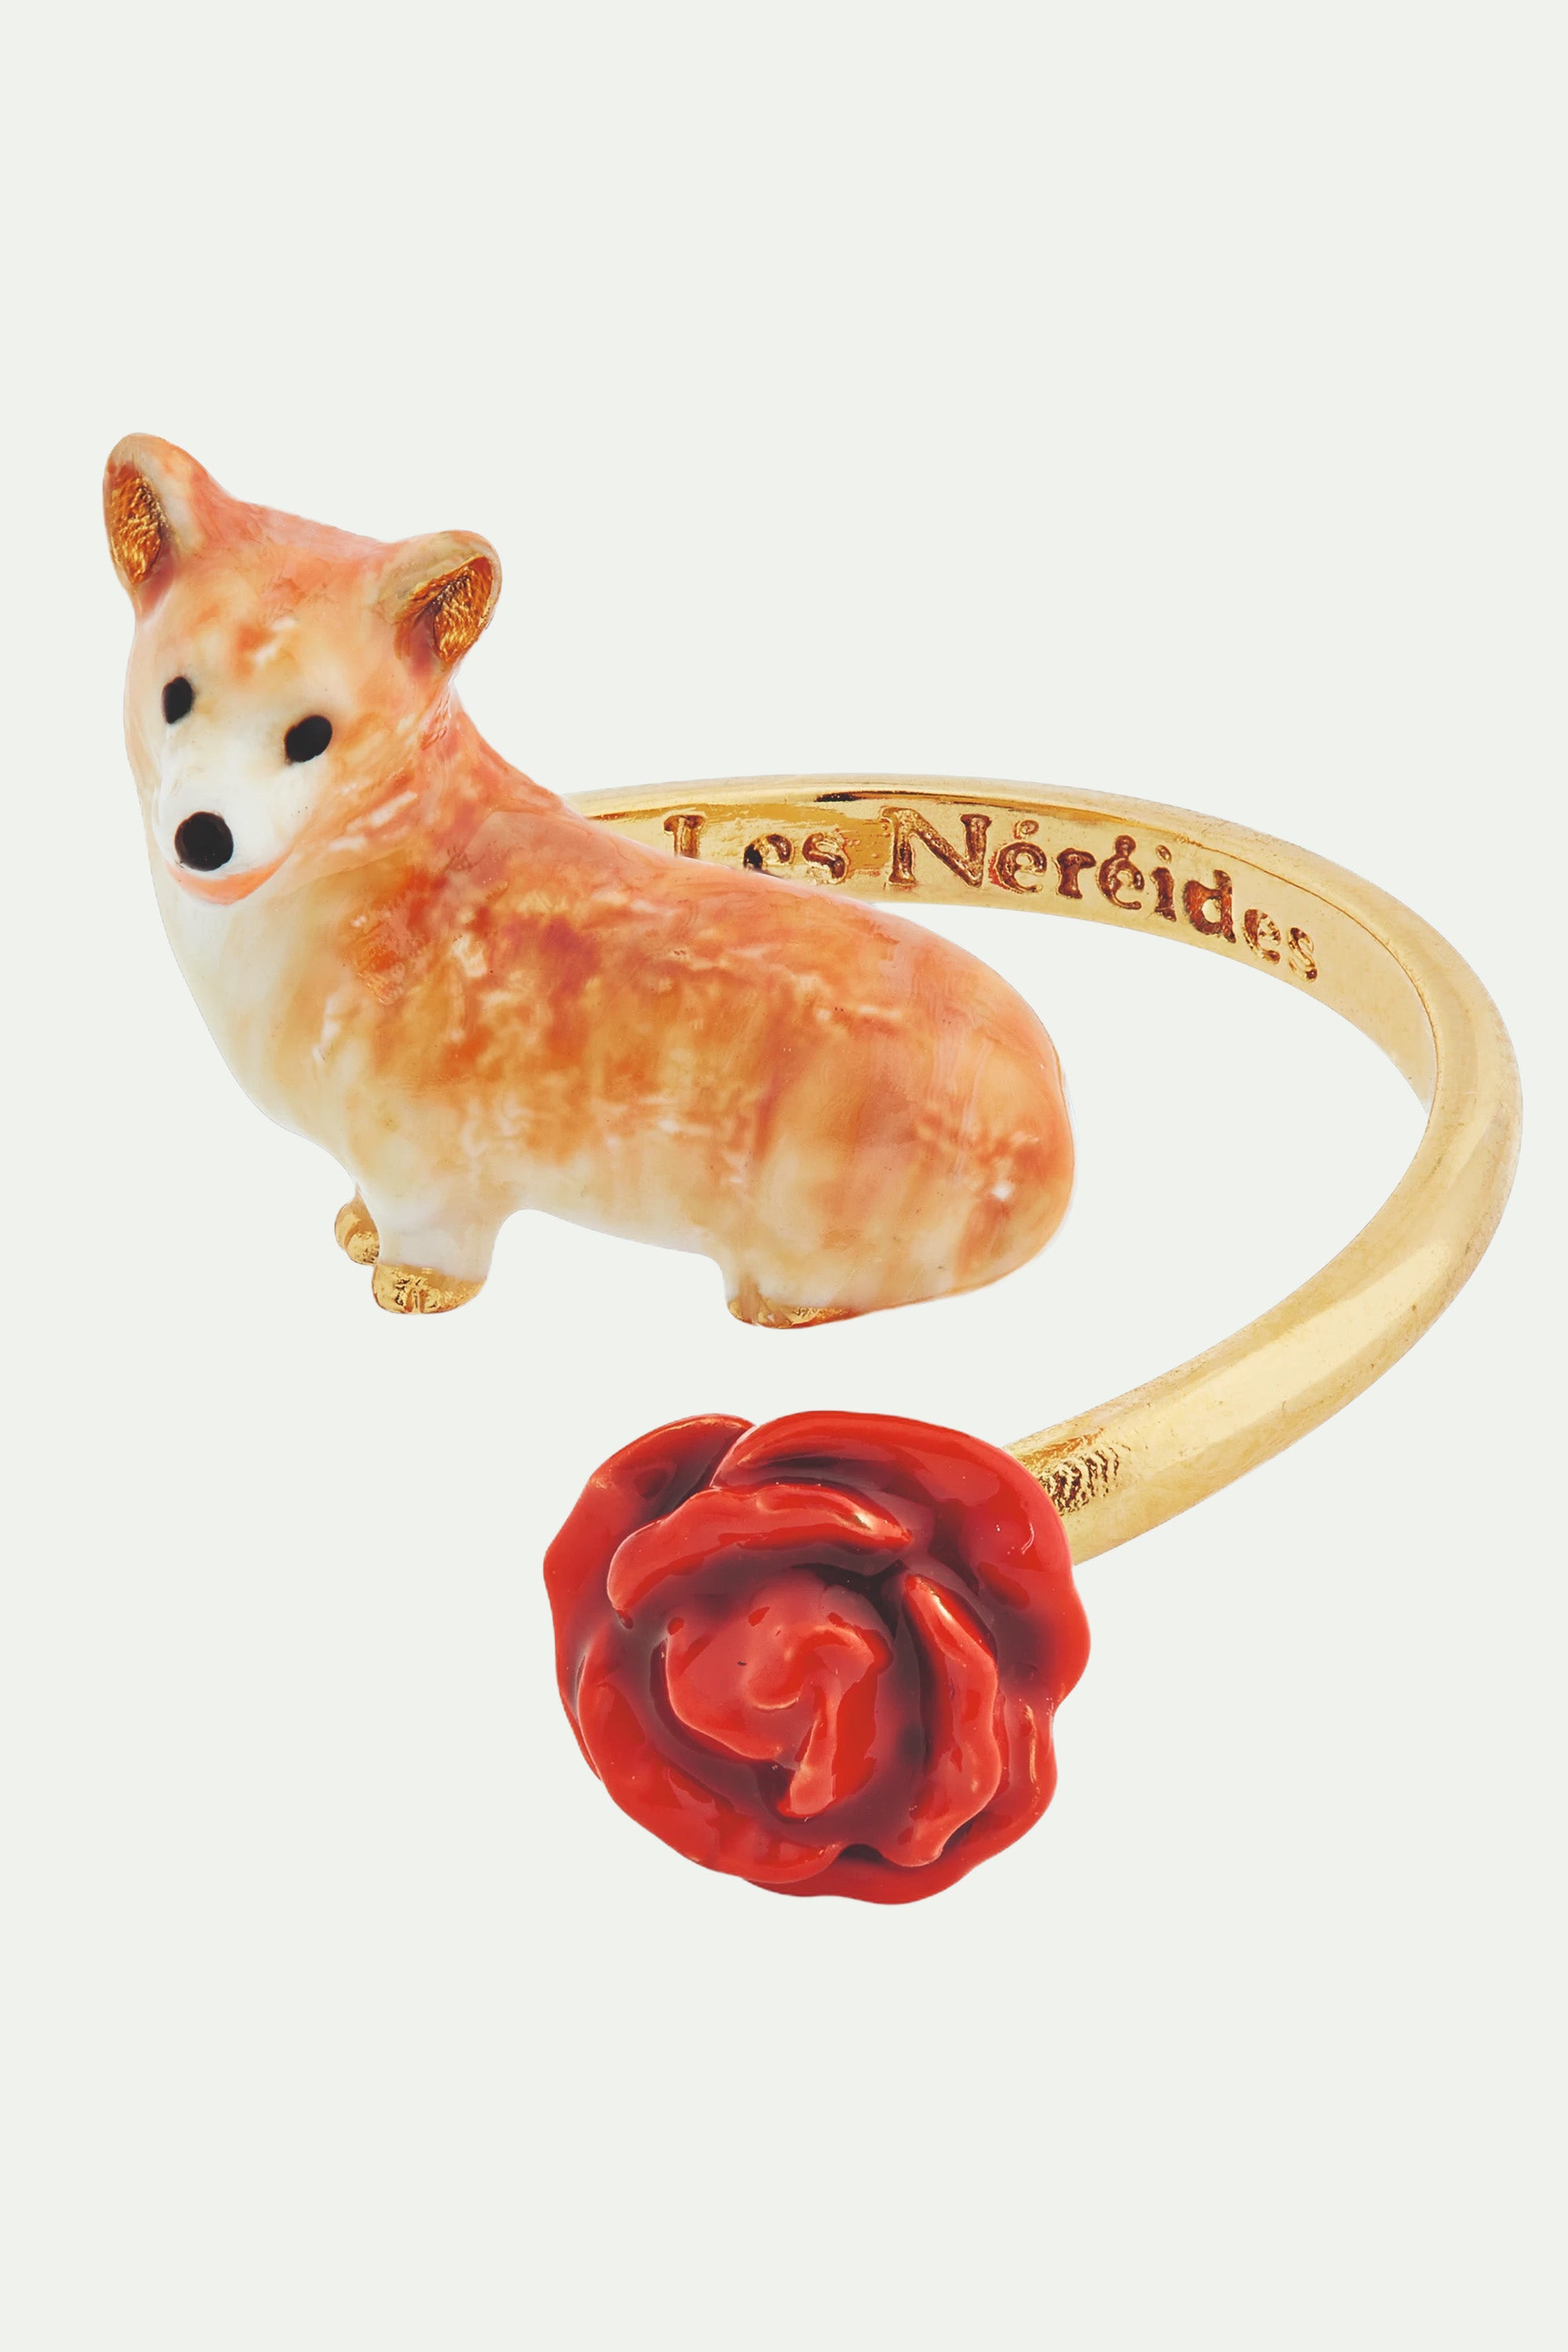 Corgi and red rose adjustable ring